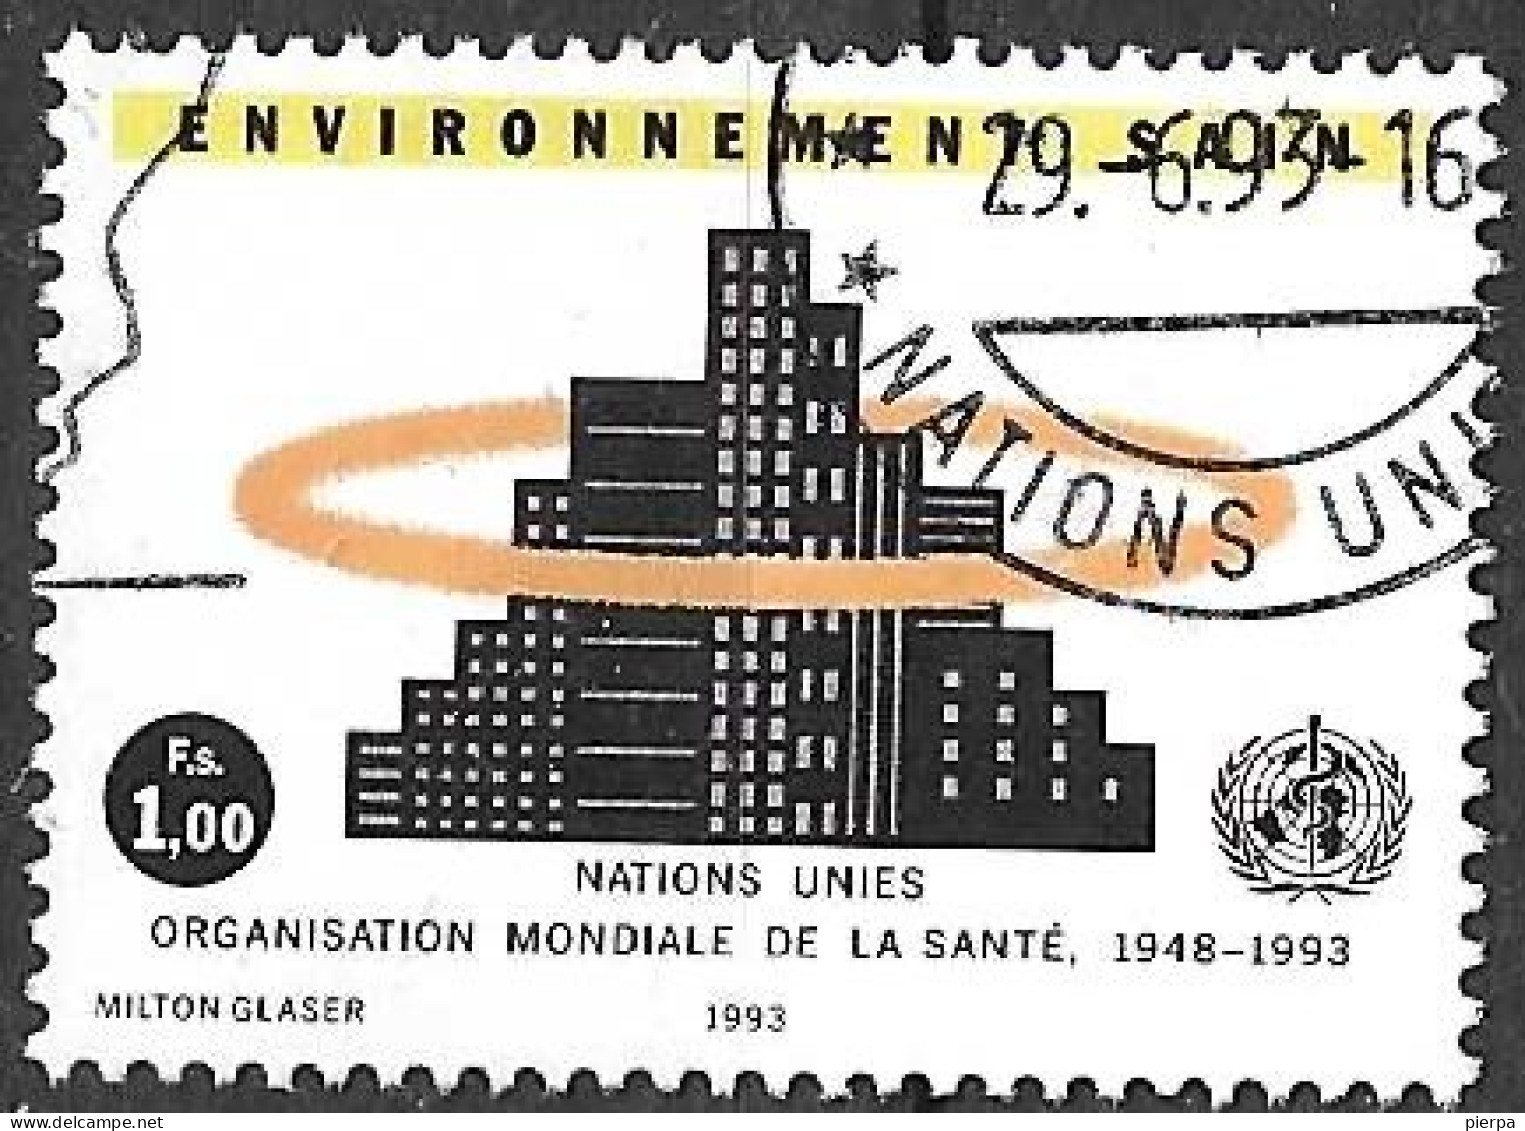 O.N.U. GENEVE - 1993 - PRO AMBIENTE - FR. 1,00 -  USATO (YVERT 234 - MICHEL 232) - Gebraucht